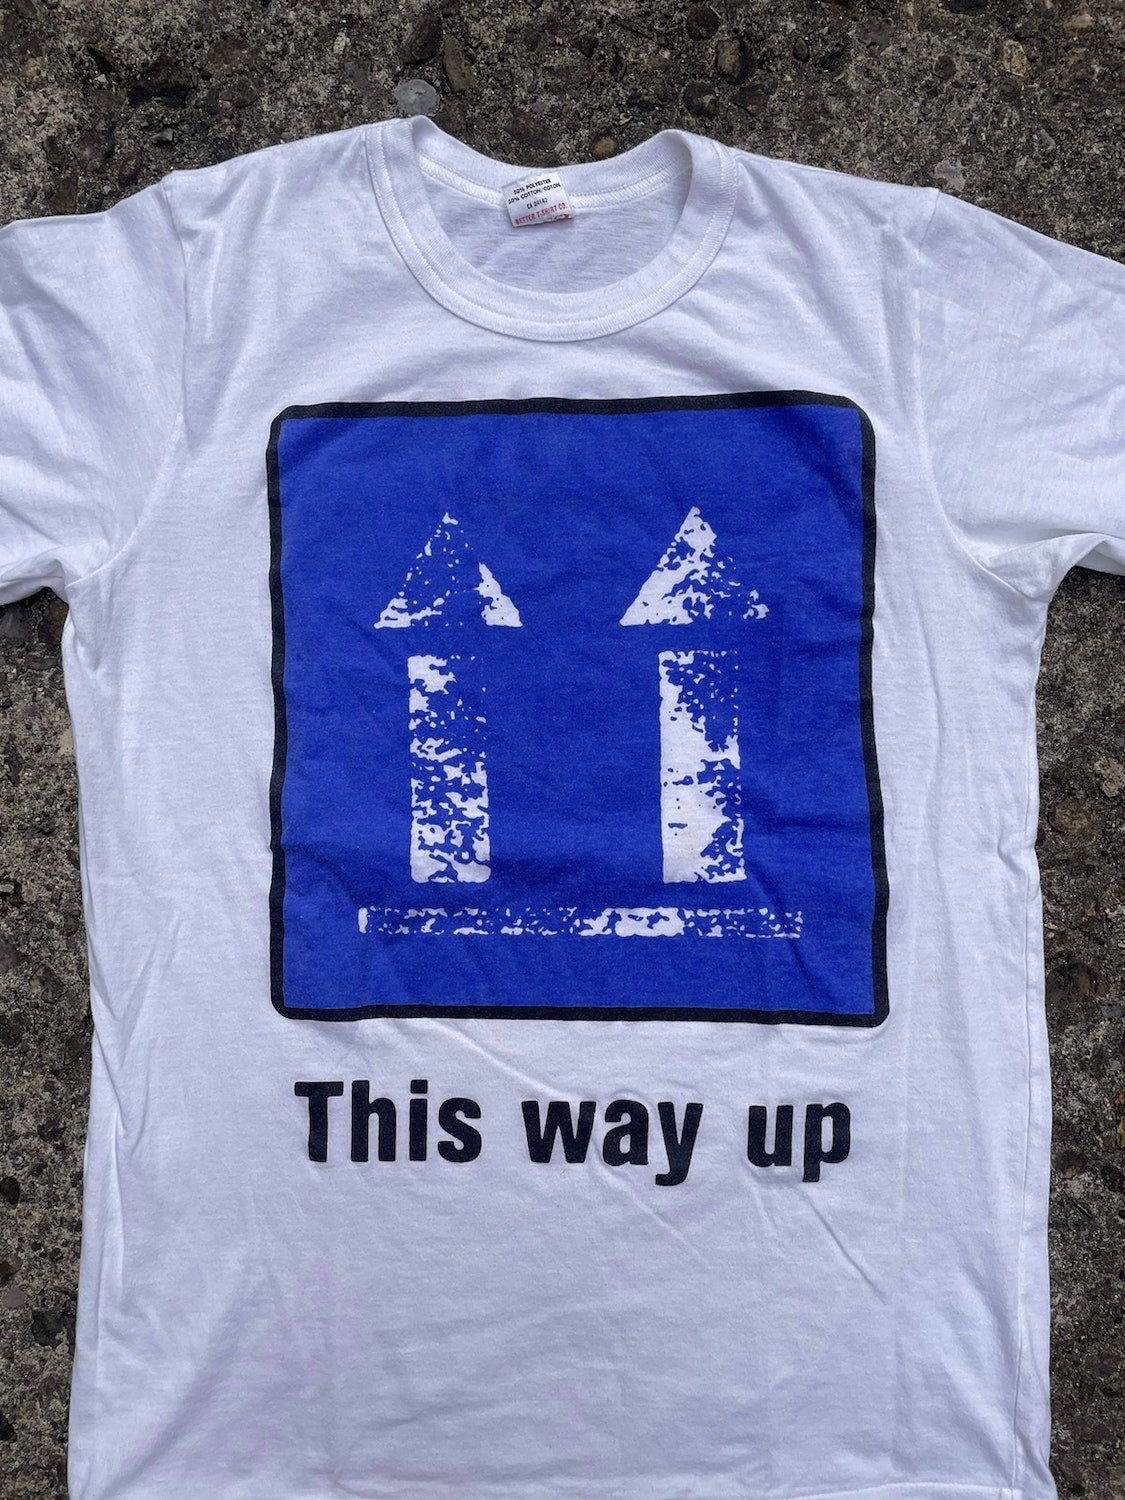 1986 Peter Gabriel 'This Way Up' Tour Band T-Shirt - L